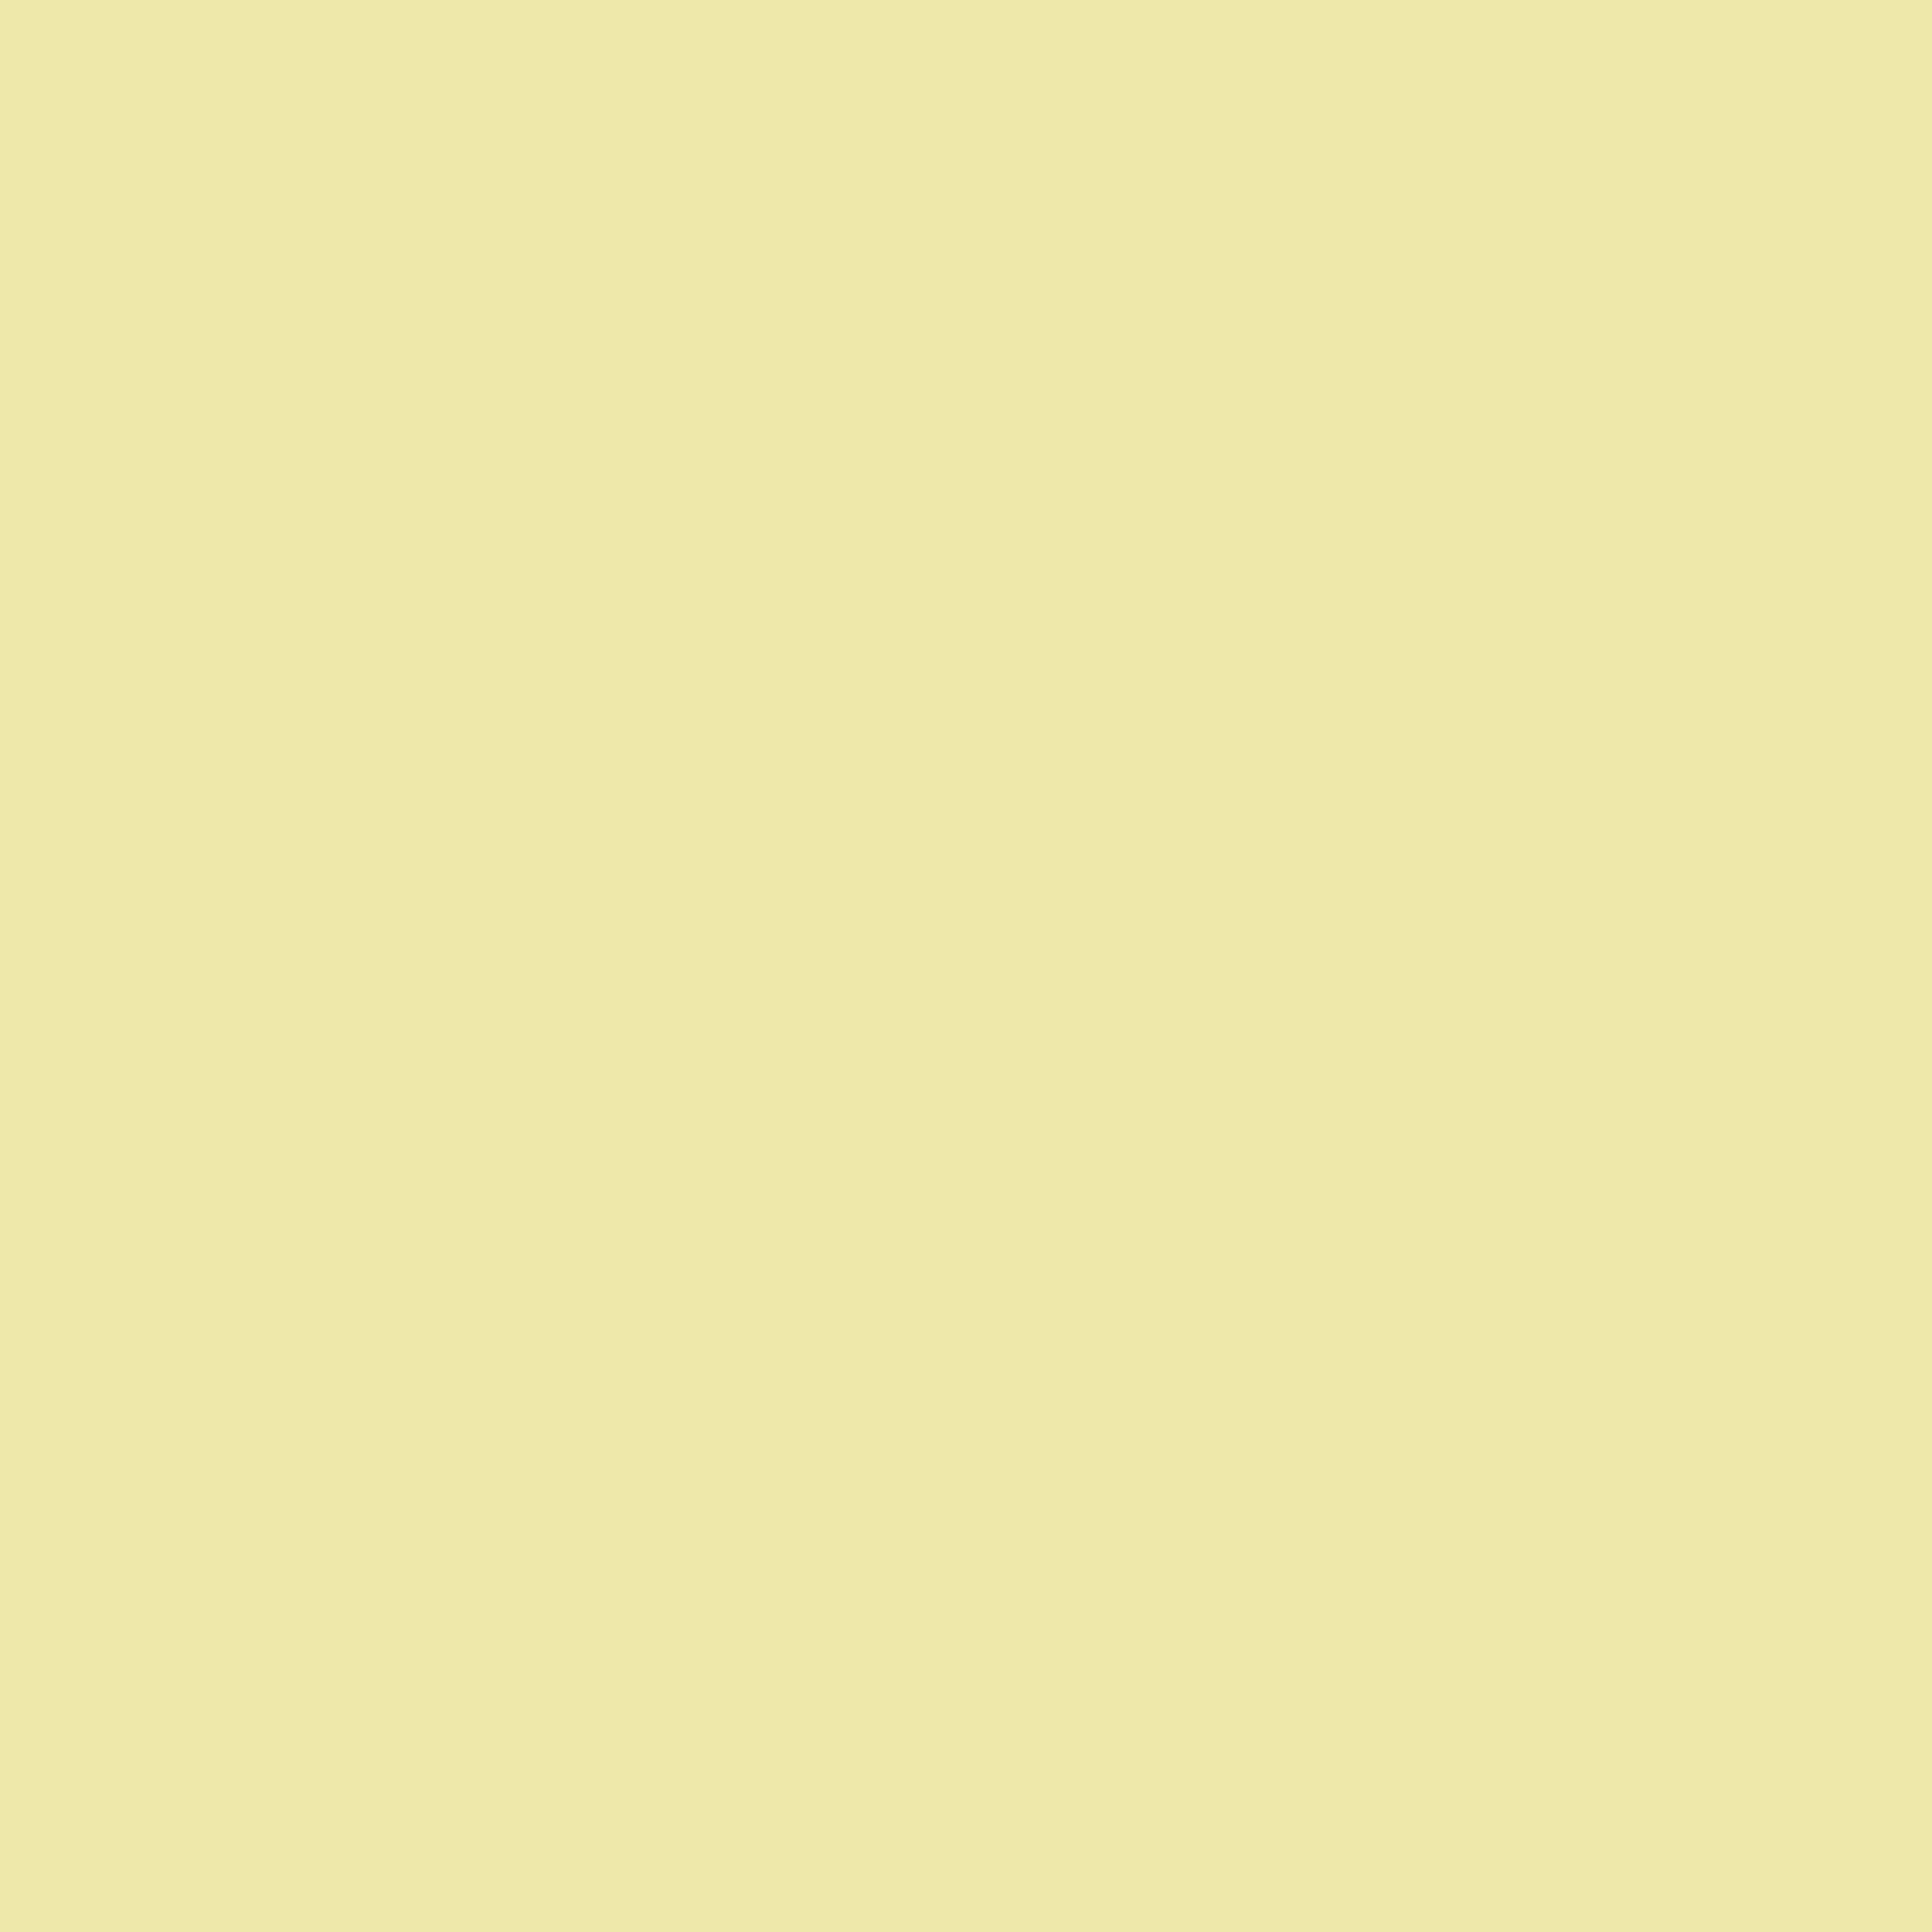 2732x2732 Pale Goldenrod Solid Color Background